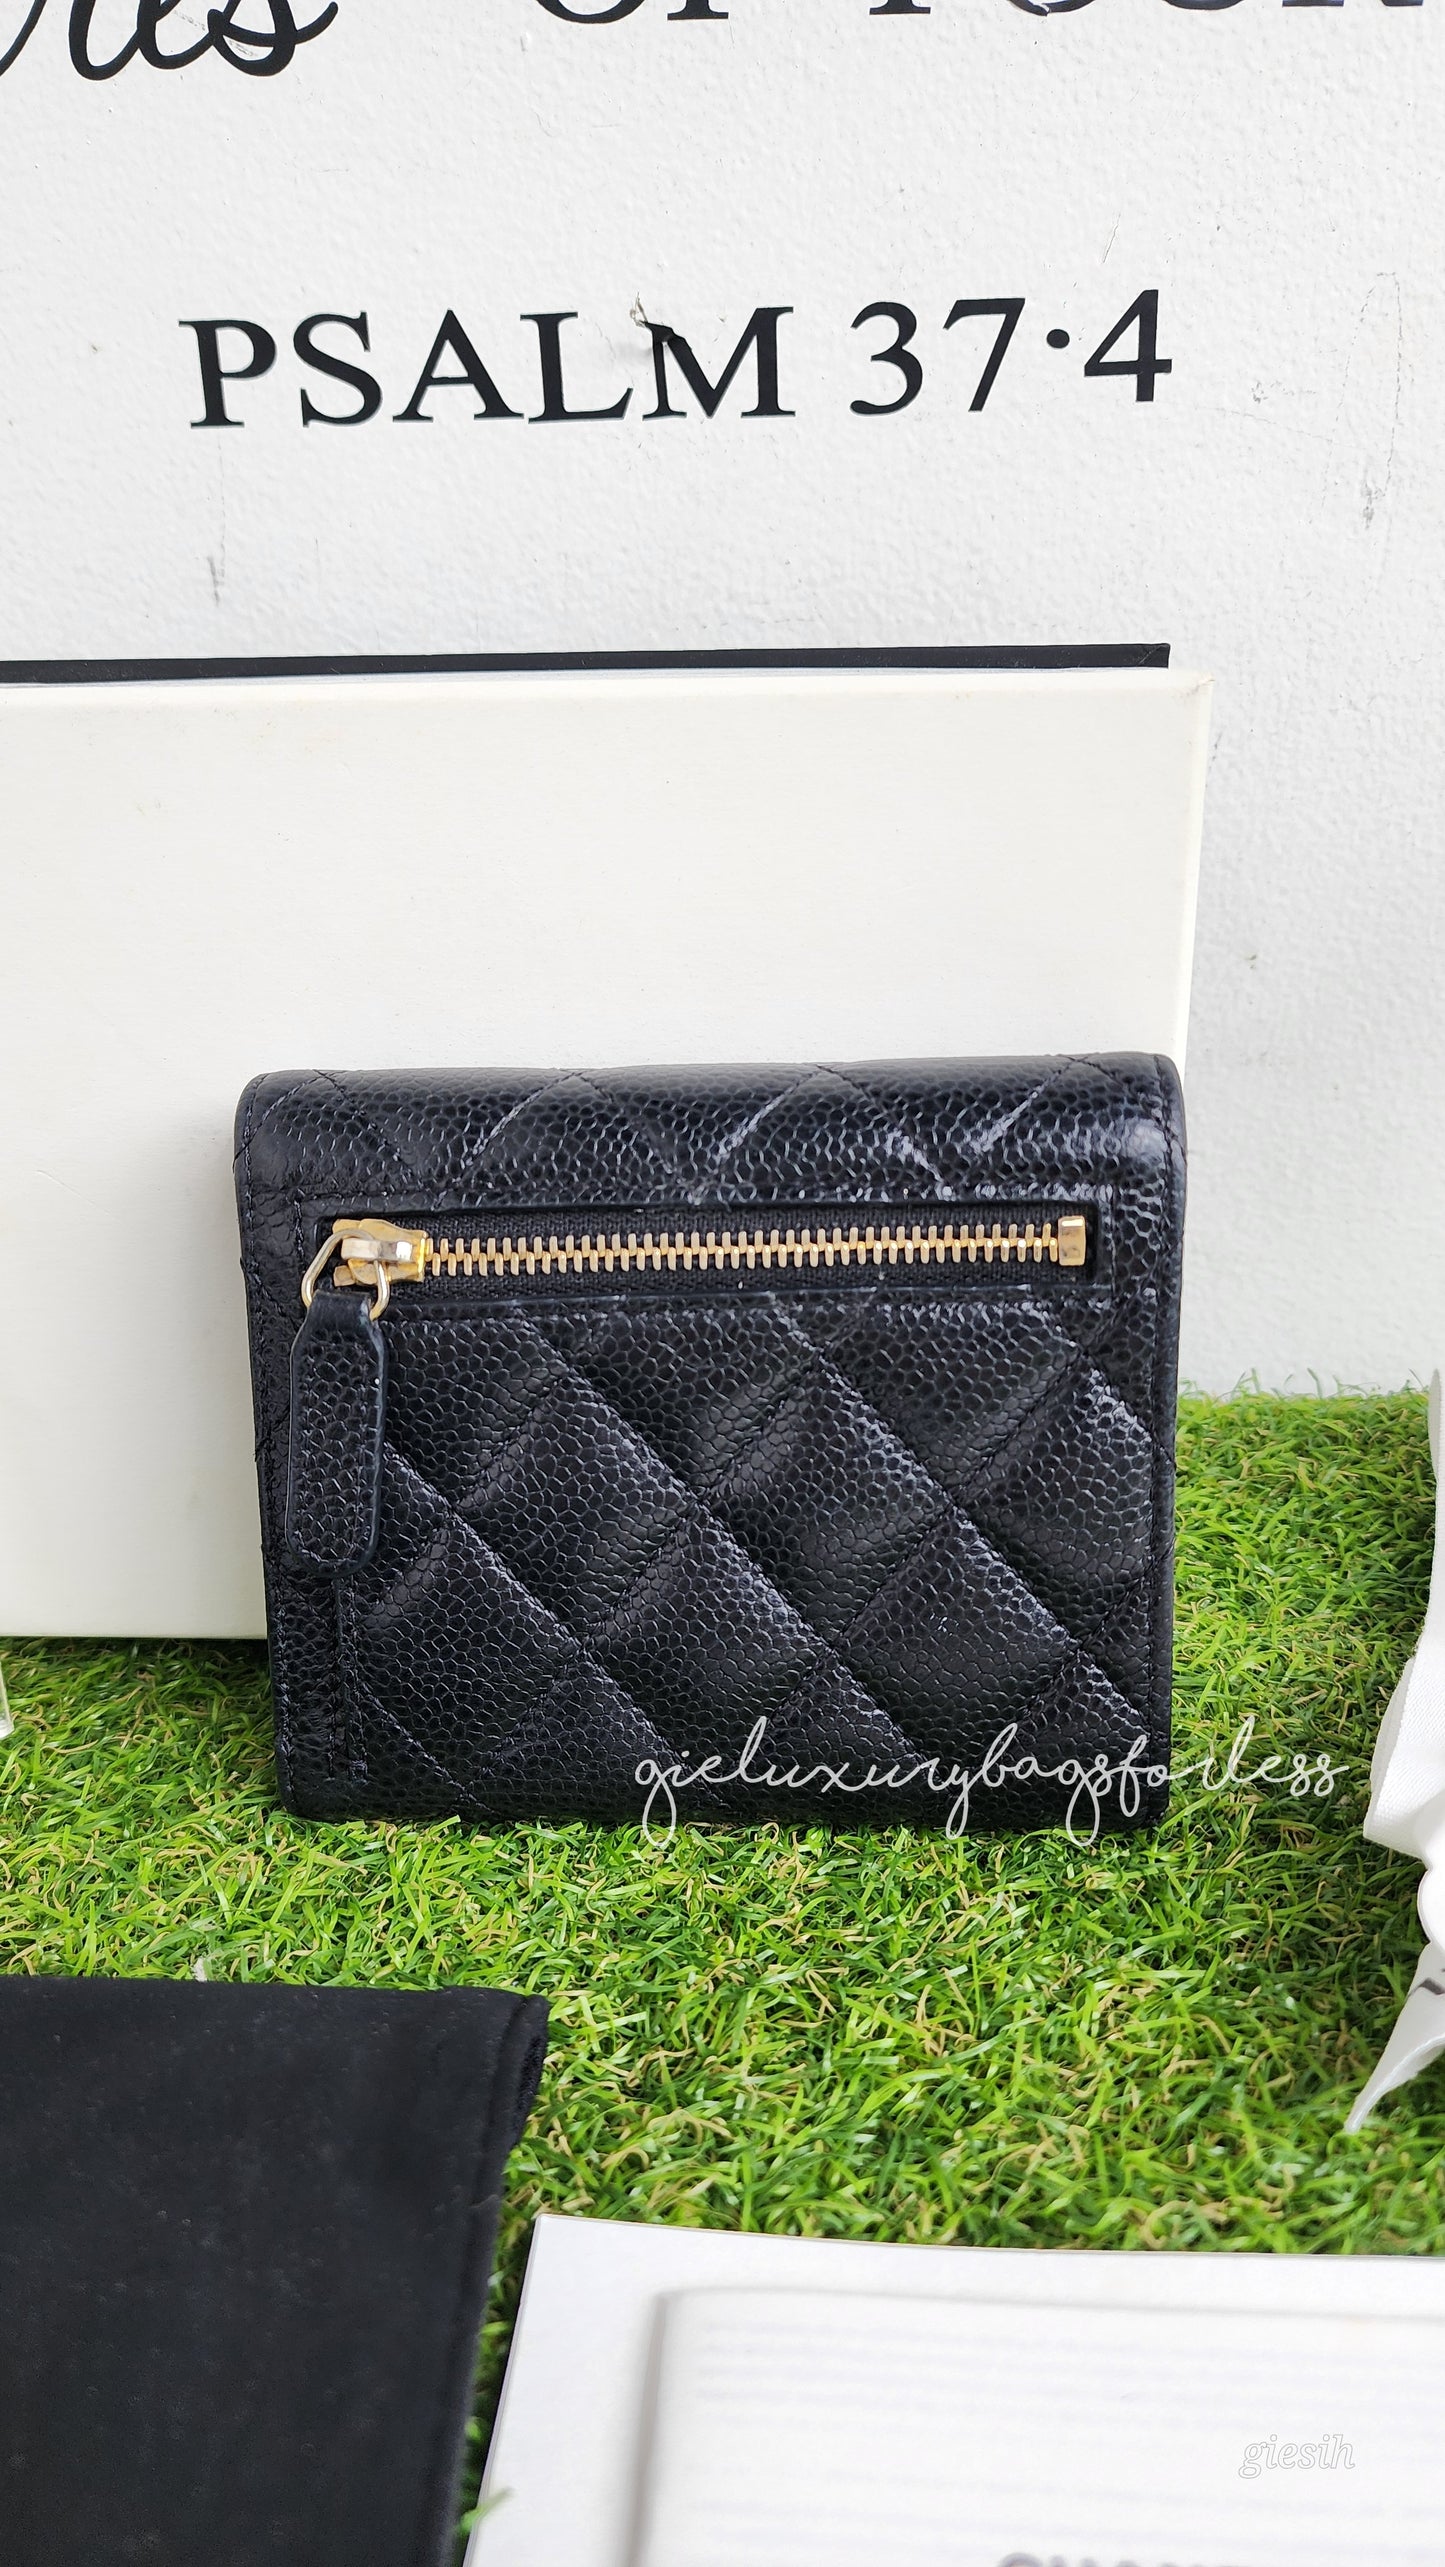 Chanel tri-fold classic wallet